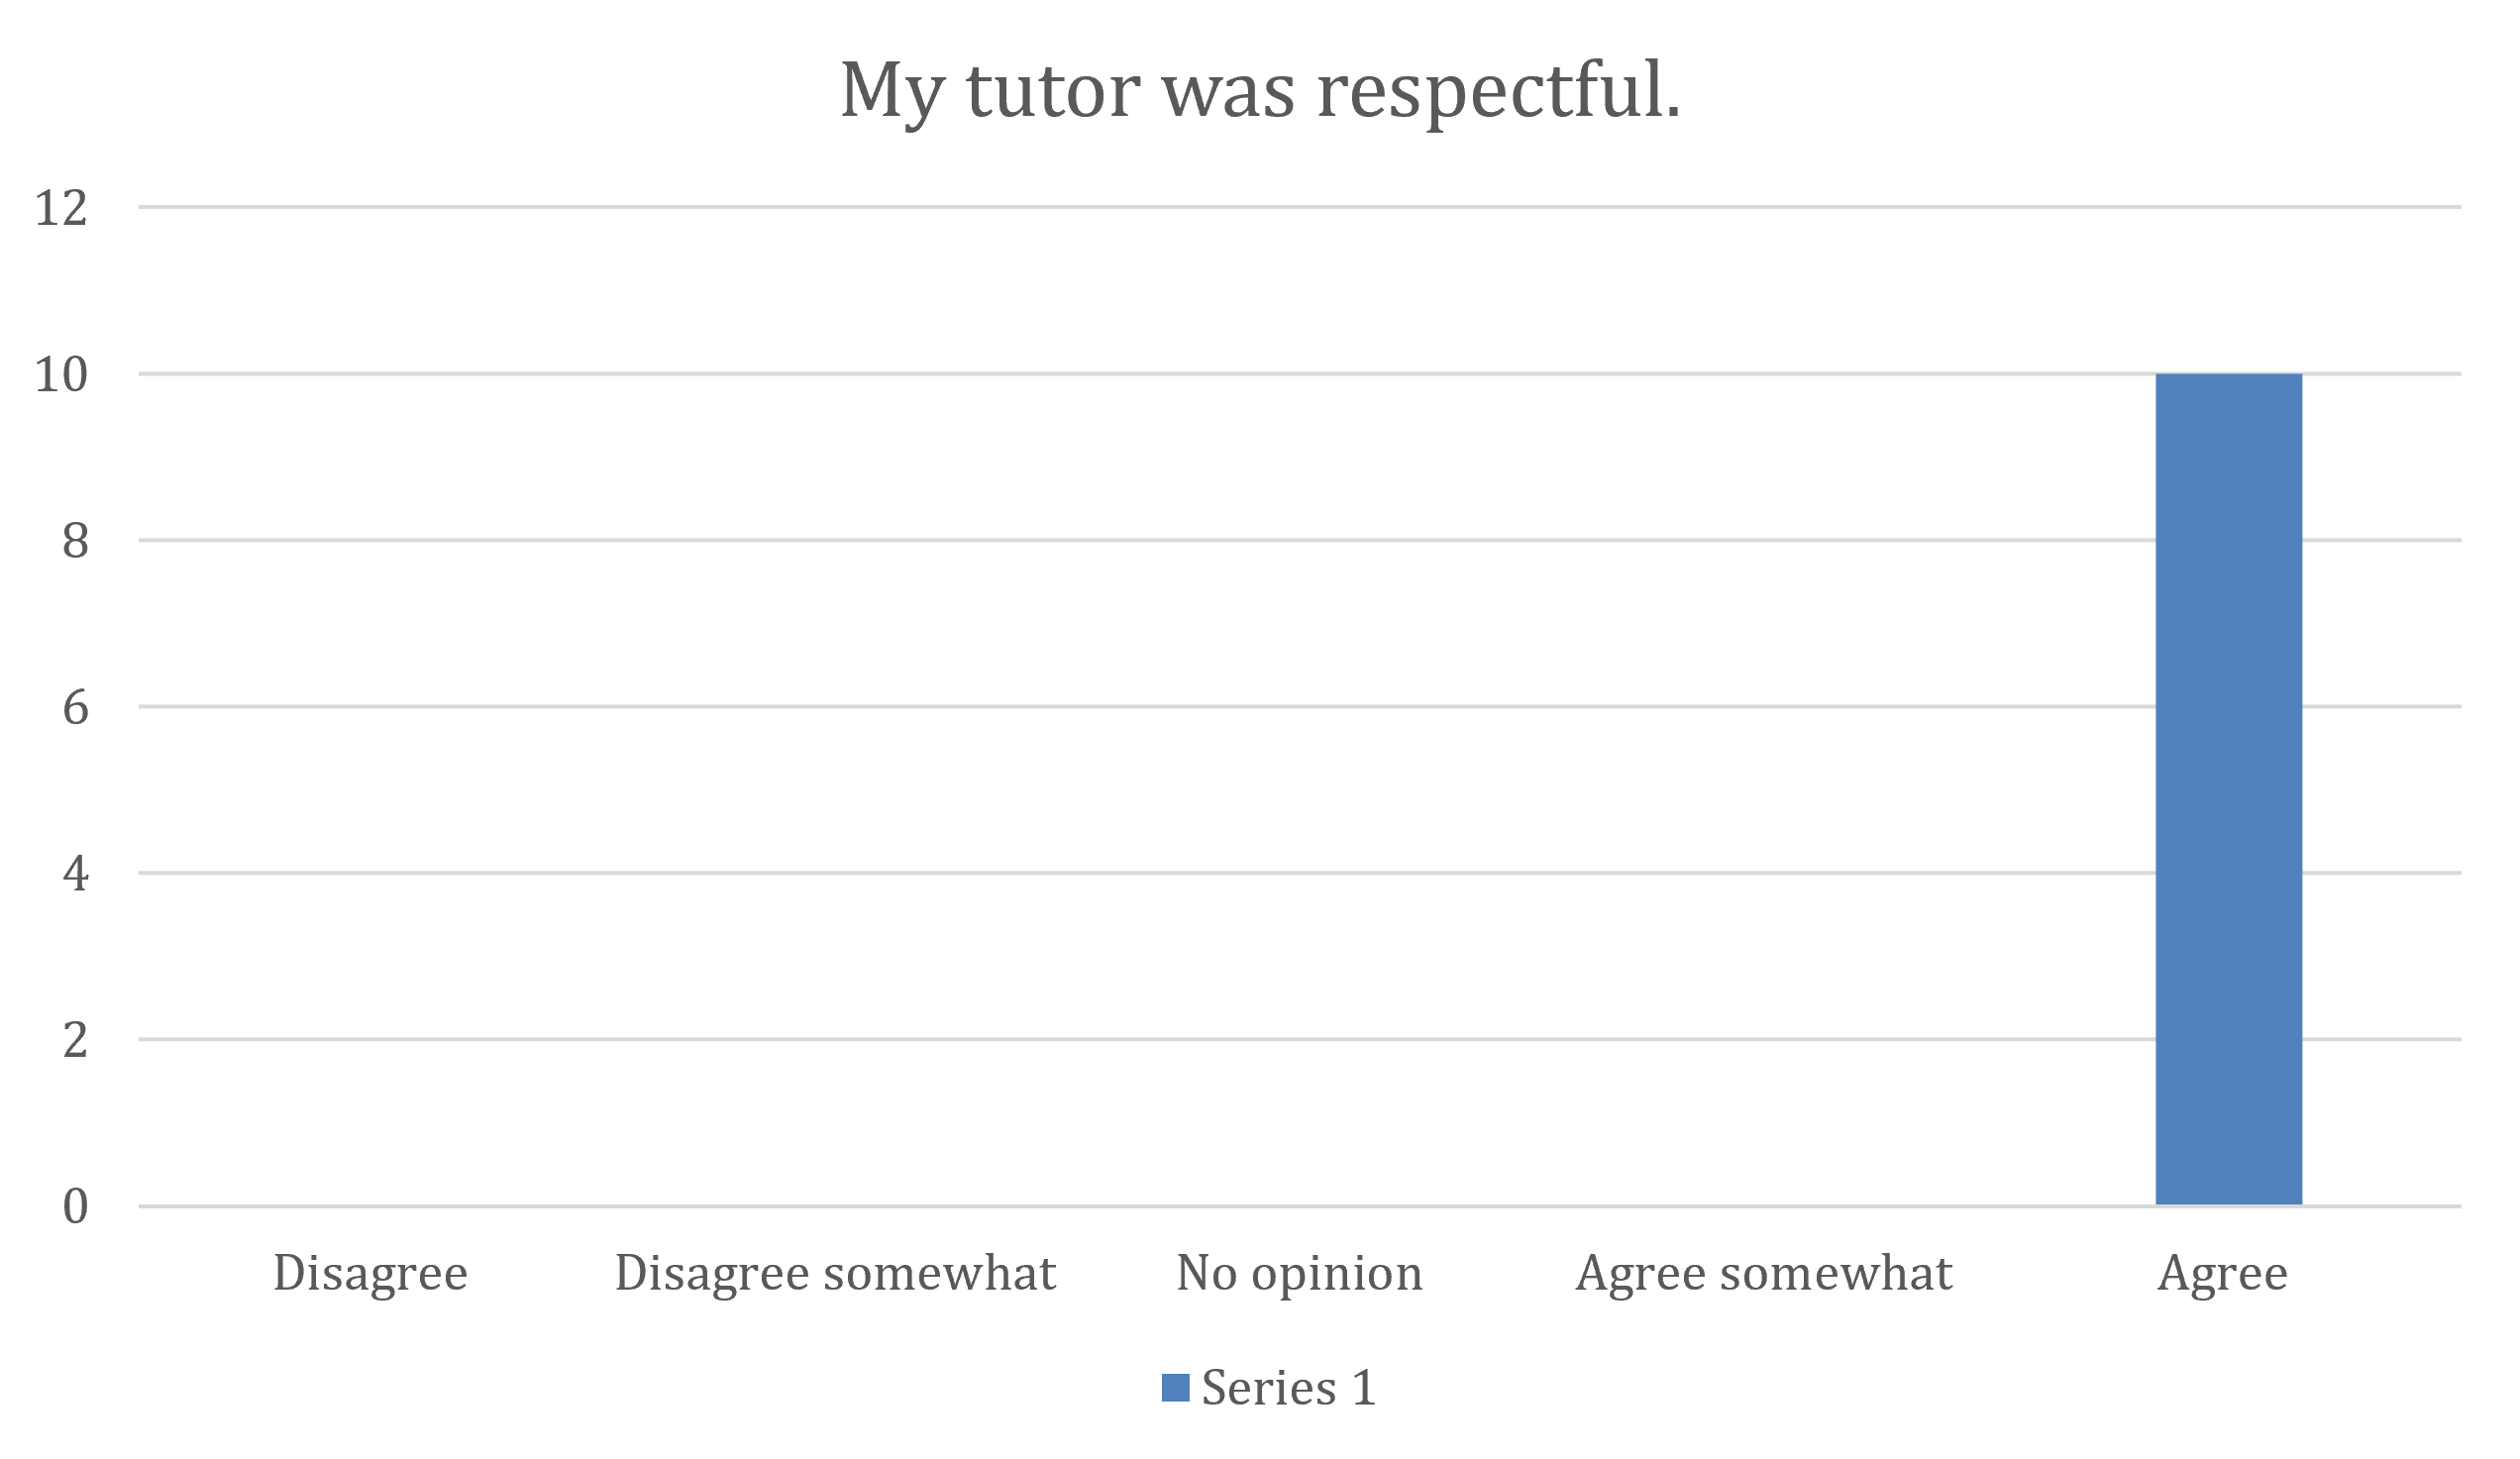 My tutor was respectful.